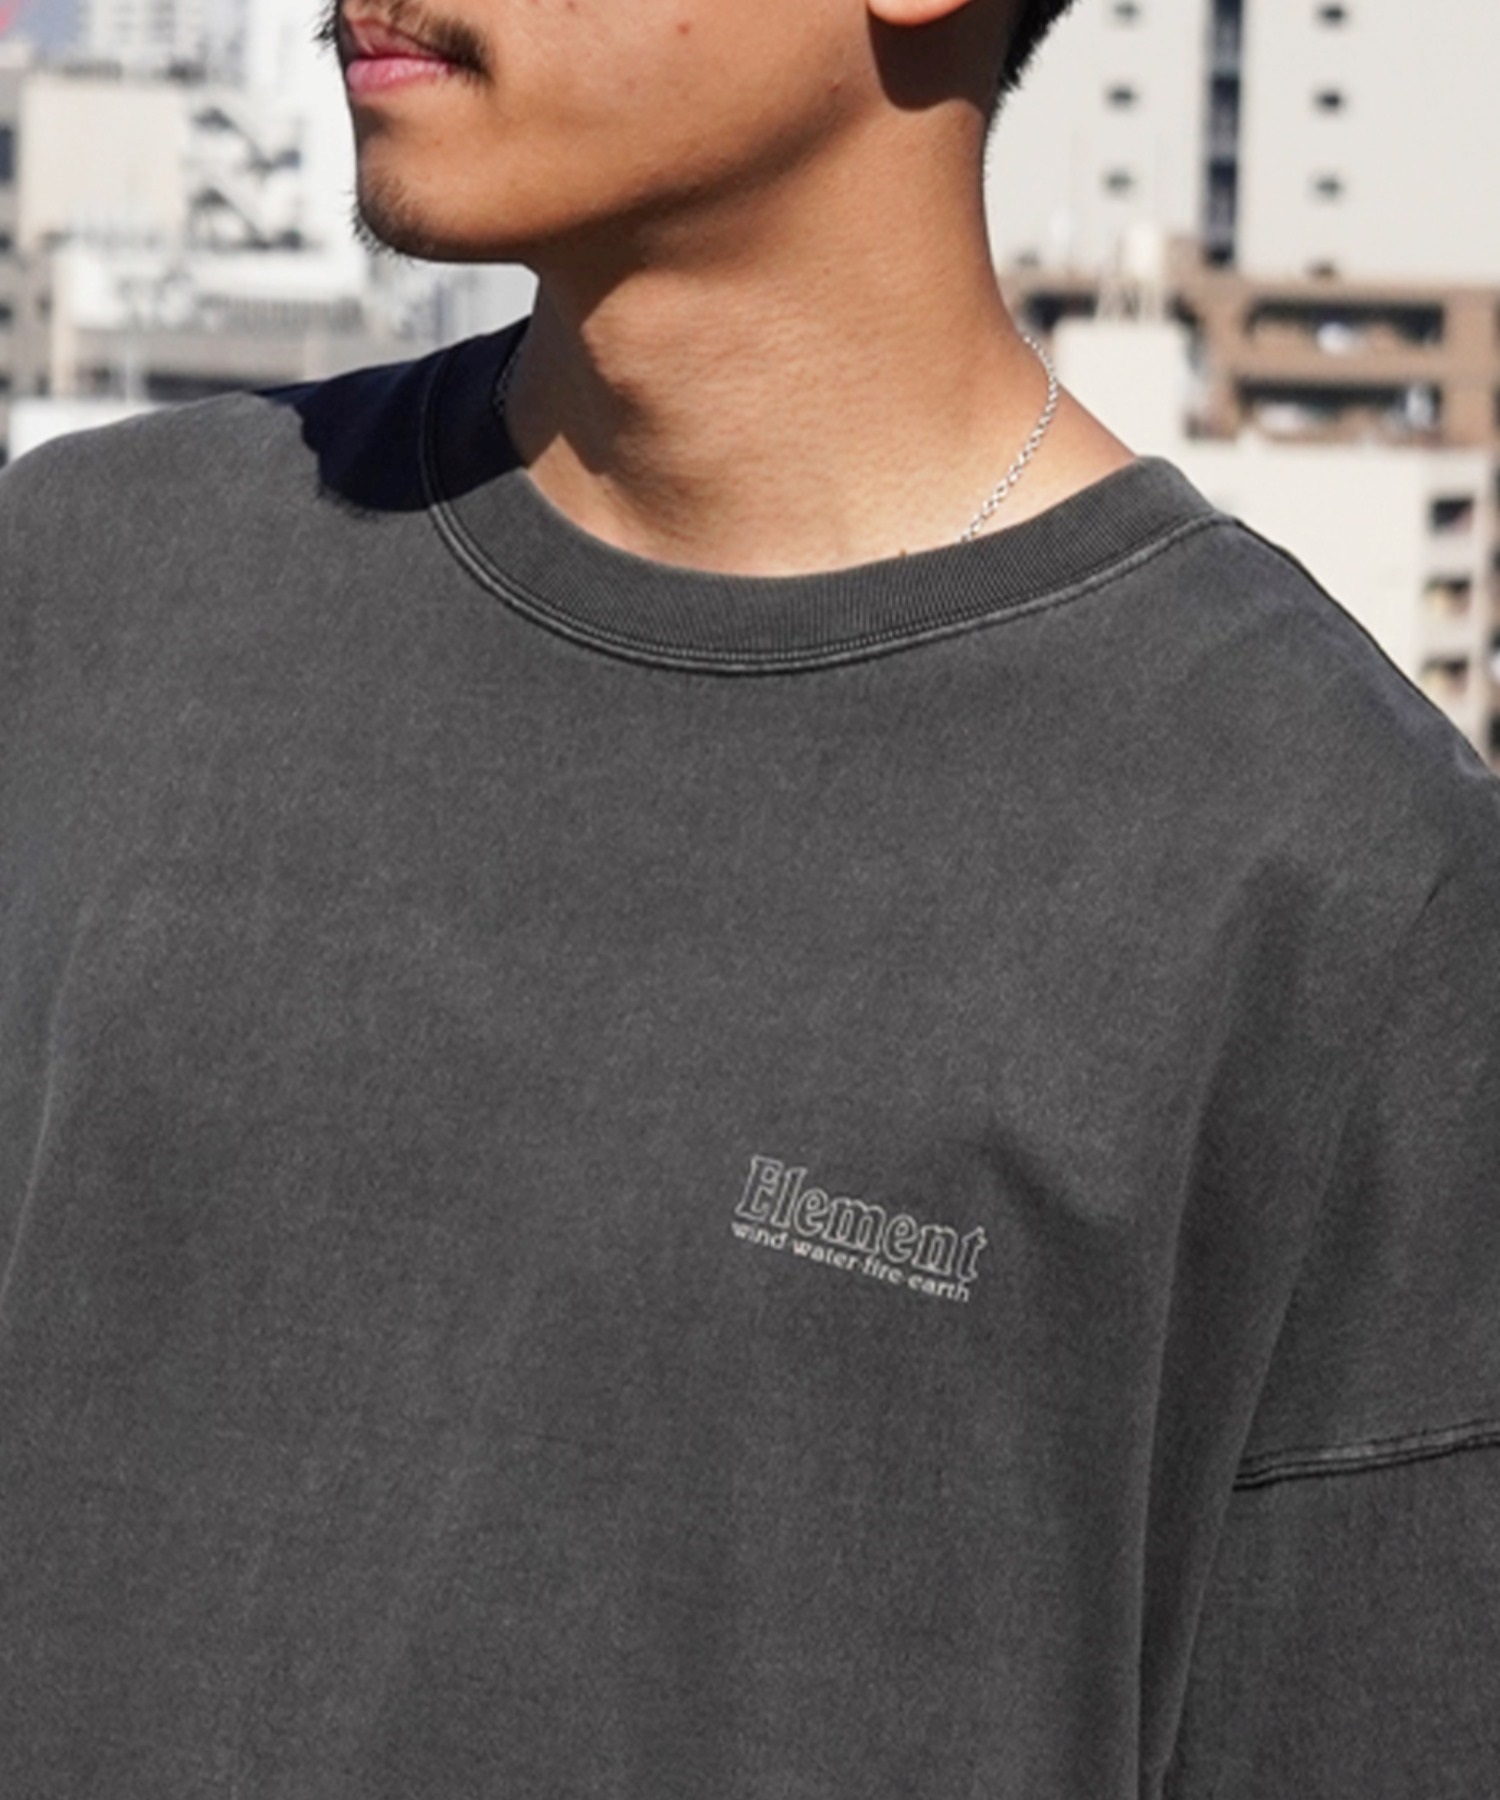 ELEMENT エレメント メンズ 半袖 Tシャツ オーバーサイズ バックプリント サークルロゴ BE021-250(WHT-M)